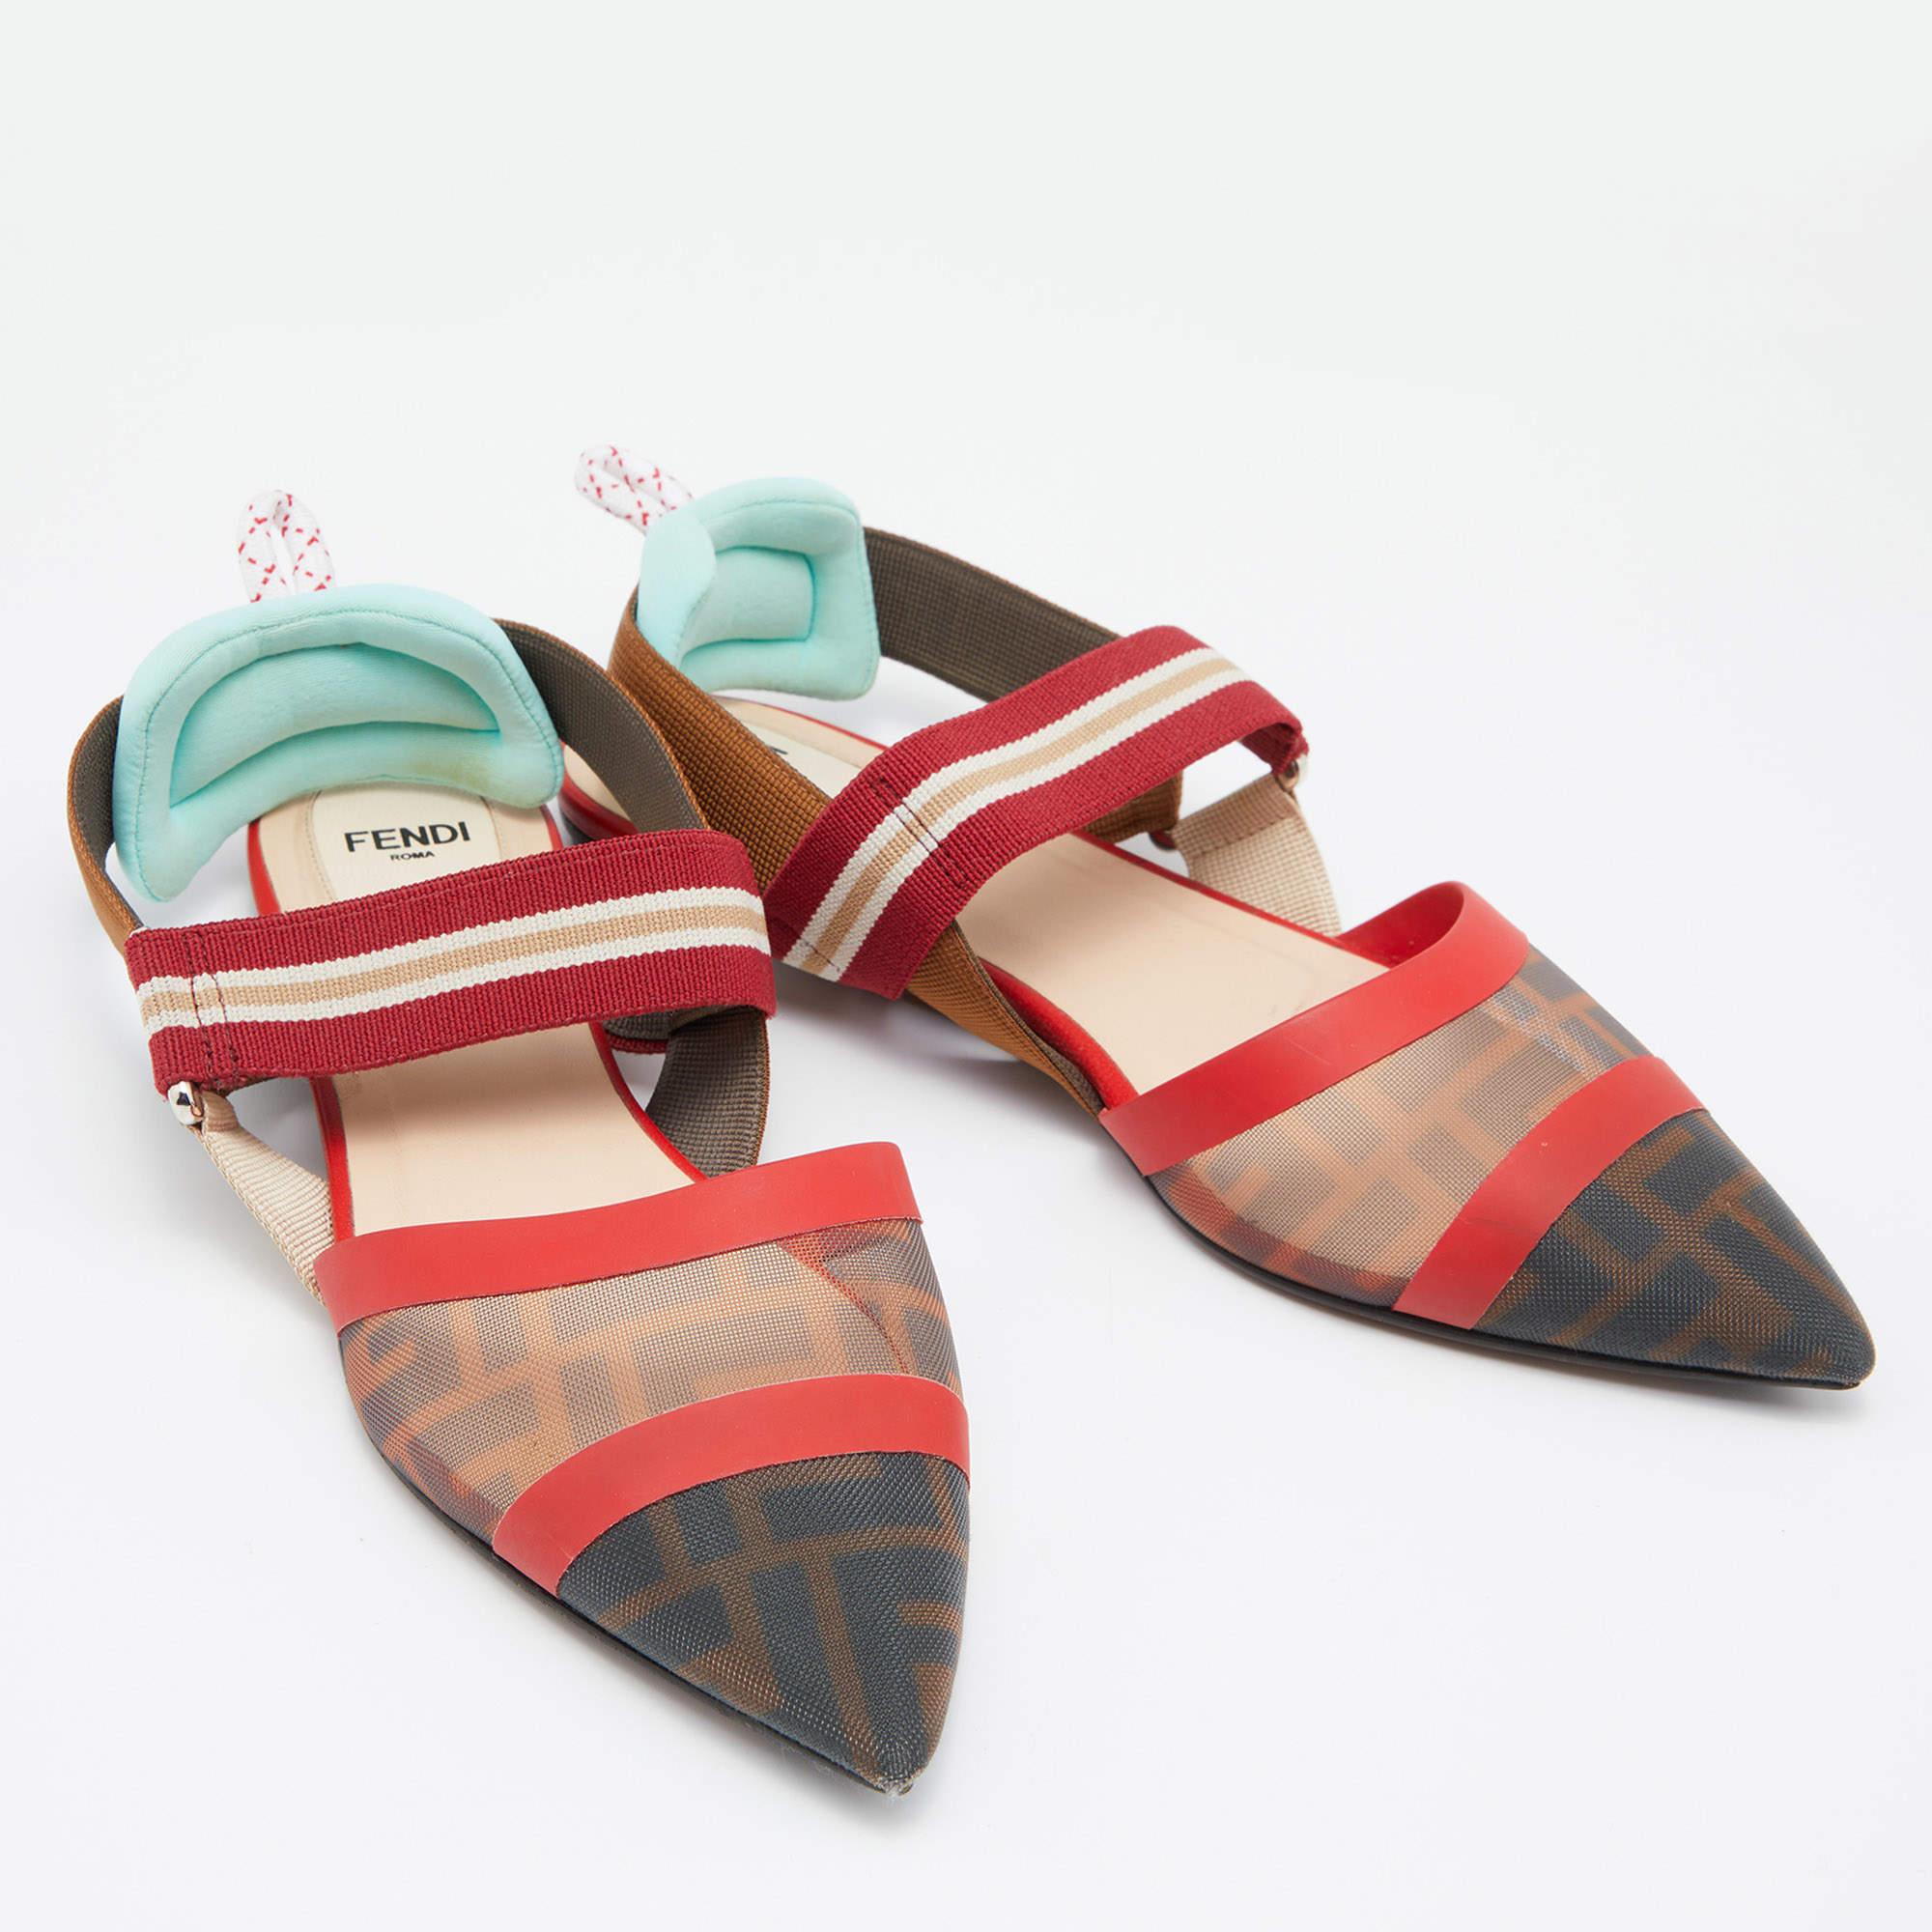 Fendi Multicolor Leather and Mesh Colibri Slingback Sandals Size 37 1